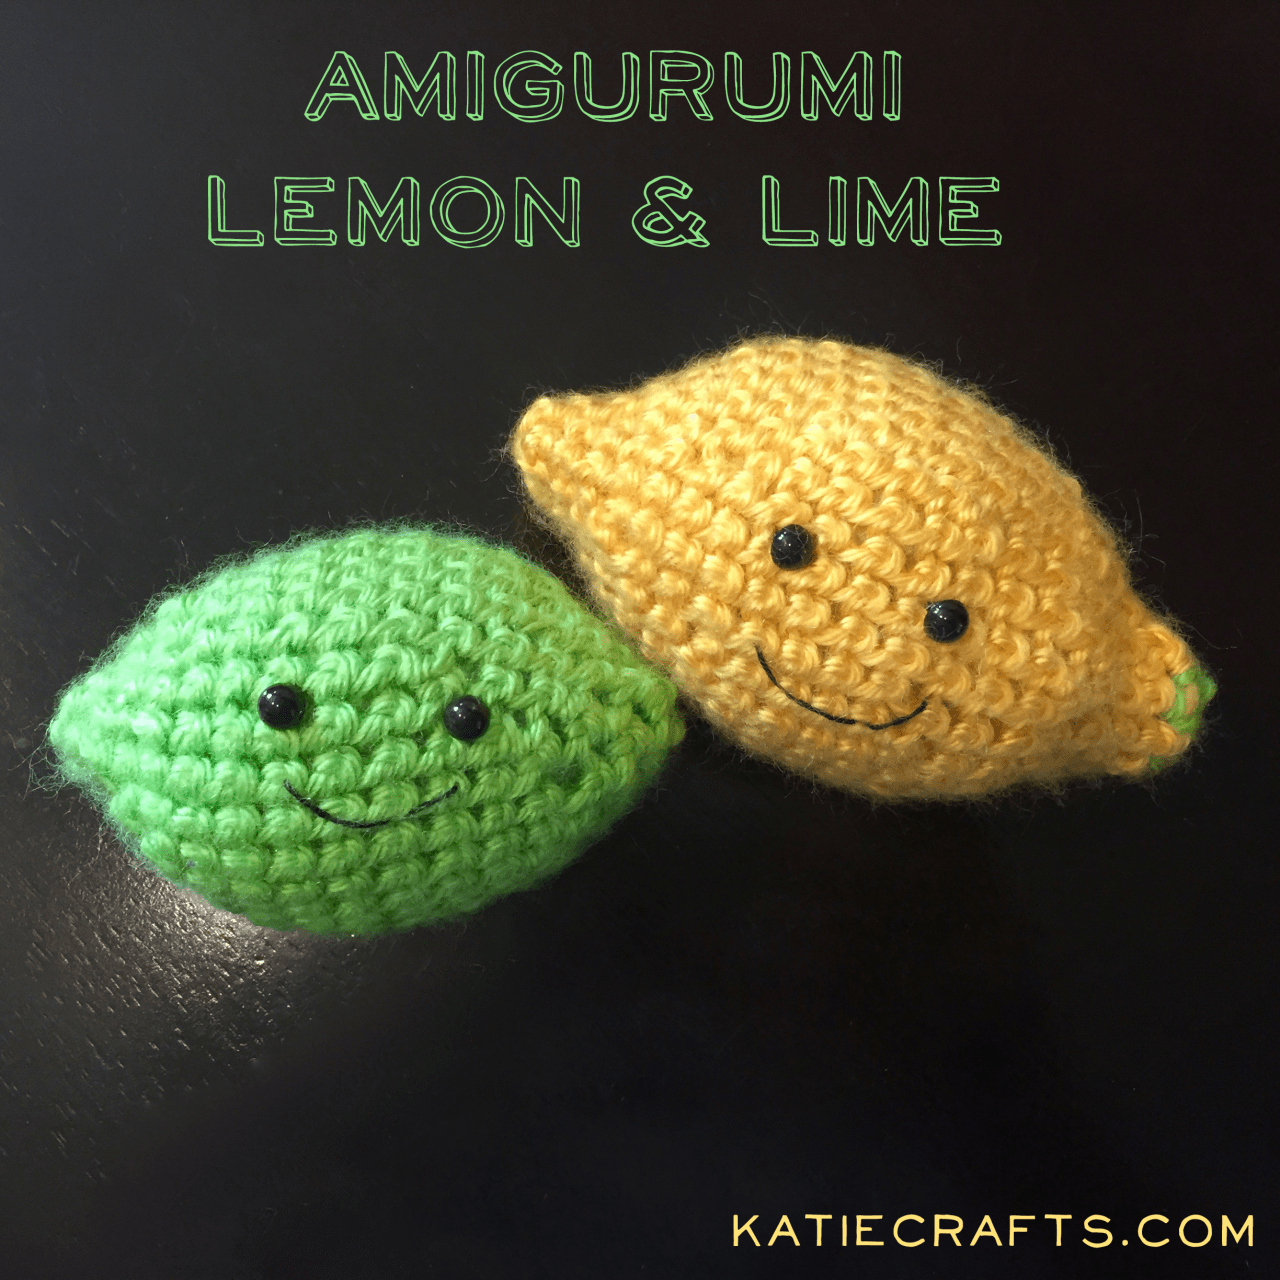 Amigurumi Lemon & Lime Crochet Patterns on Katie Crafts; https://www.katiecrafts.com